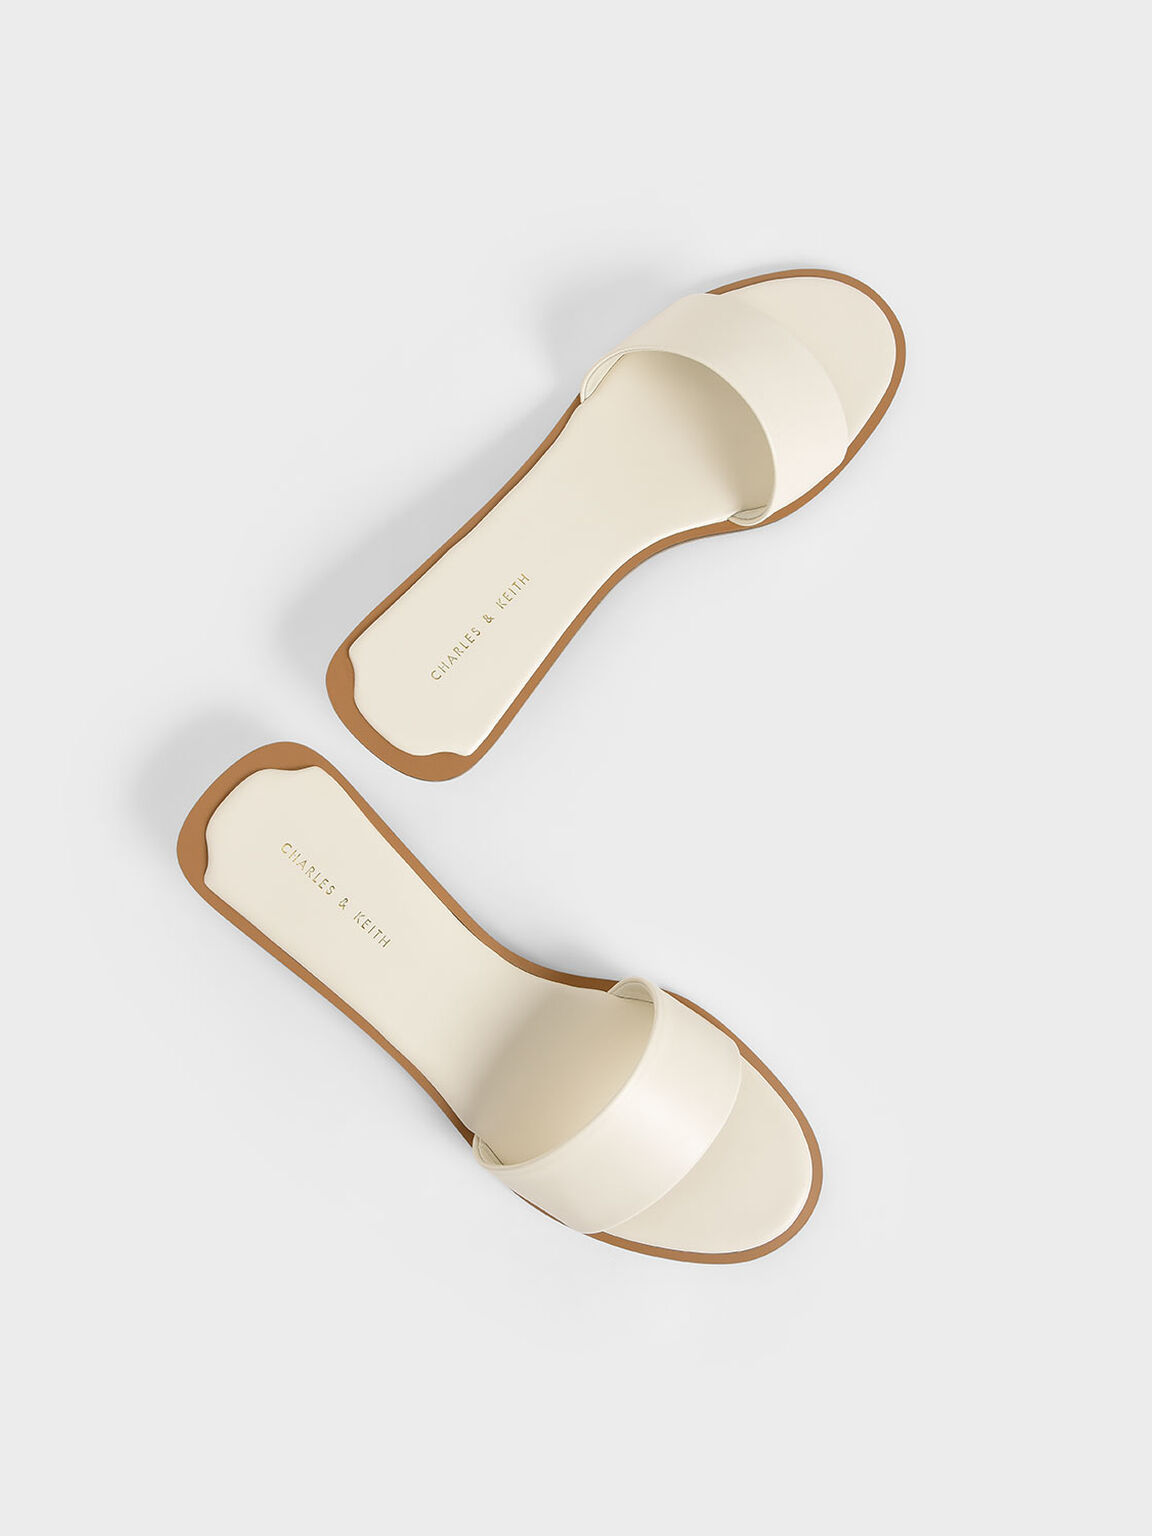 Sandal Two-Tone Slide, Cream, hi-res